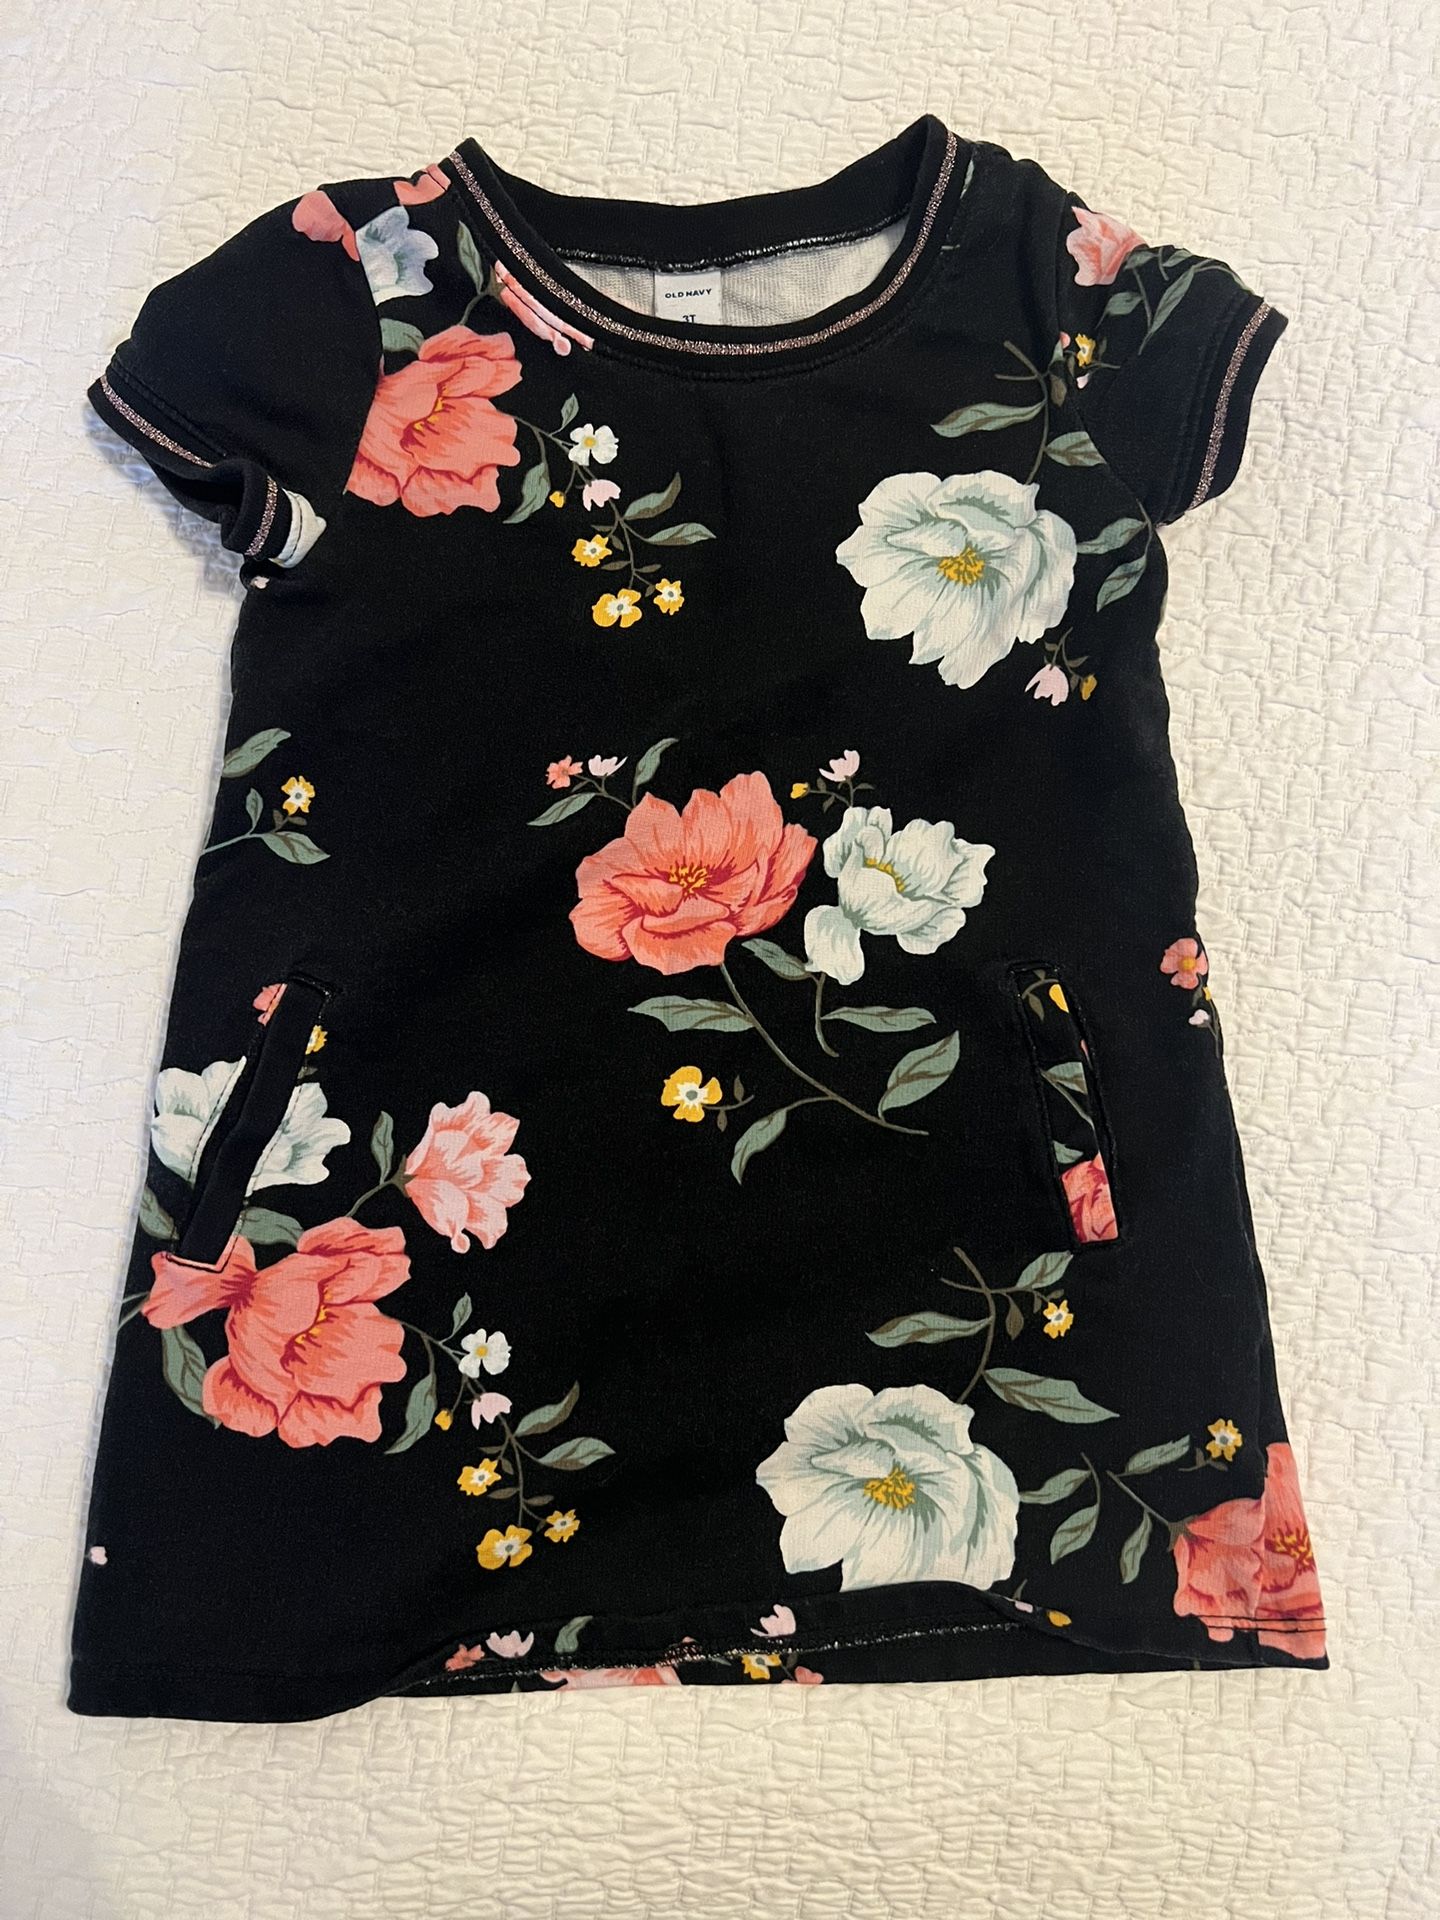 Toddler Old Navy Flower Print Dress Size 3T